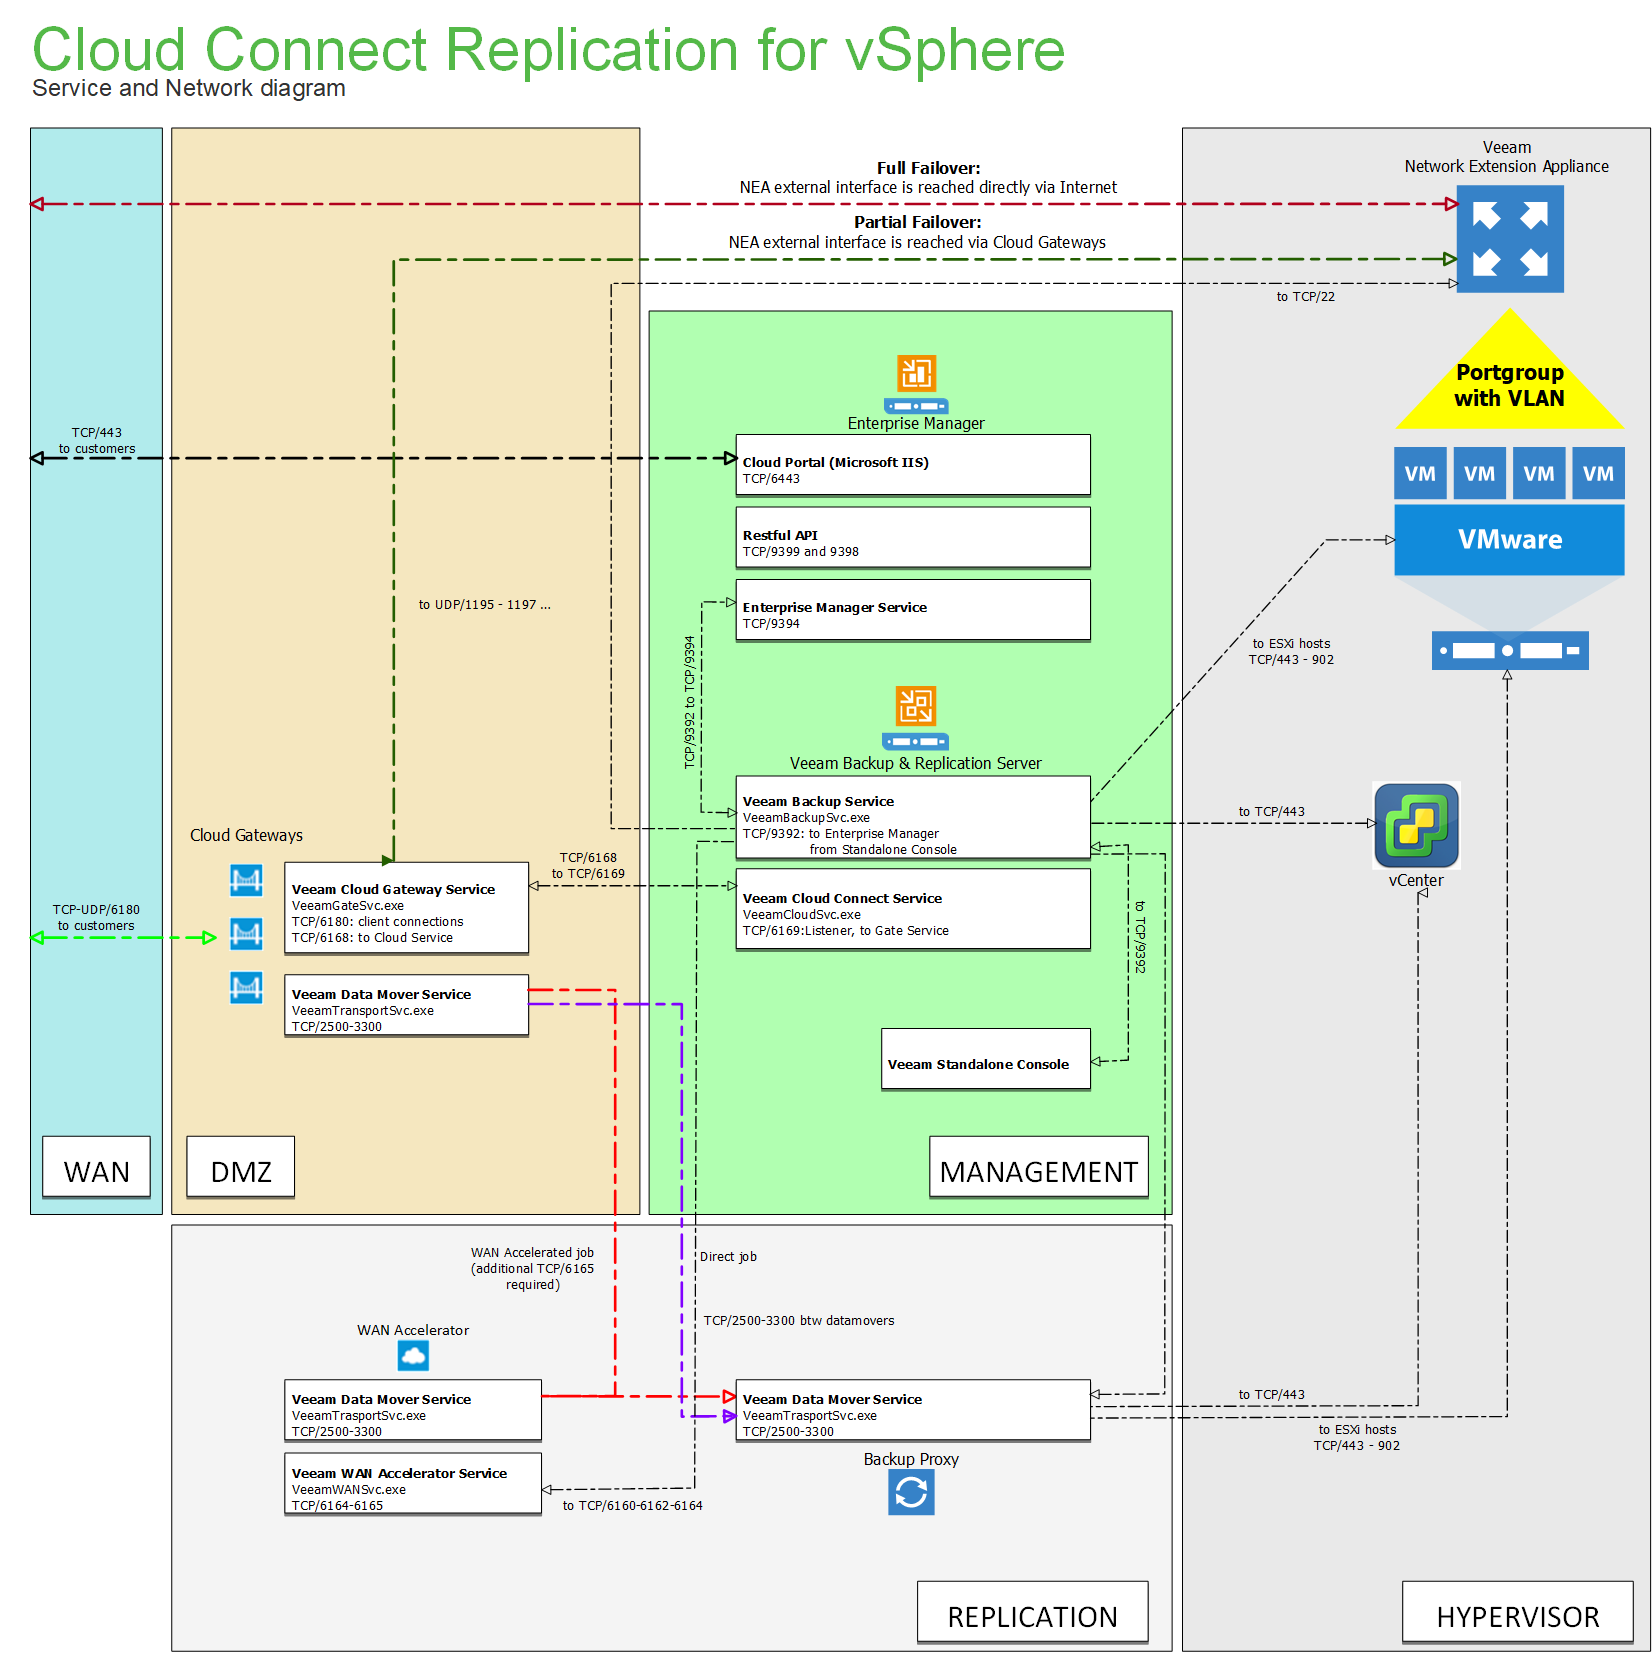 Veeam Cloud Connect Replication diagram for vSphere